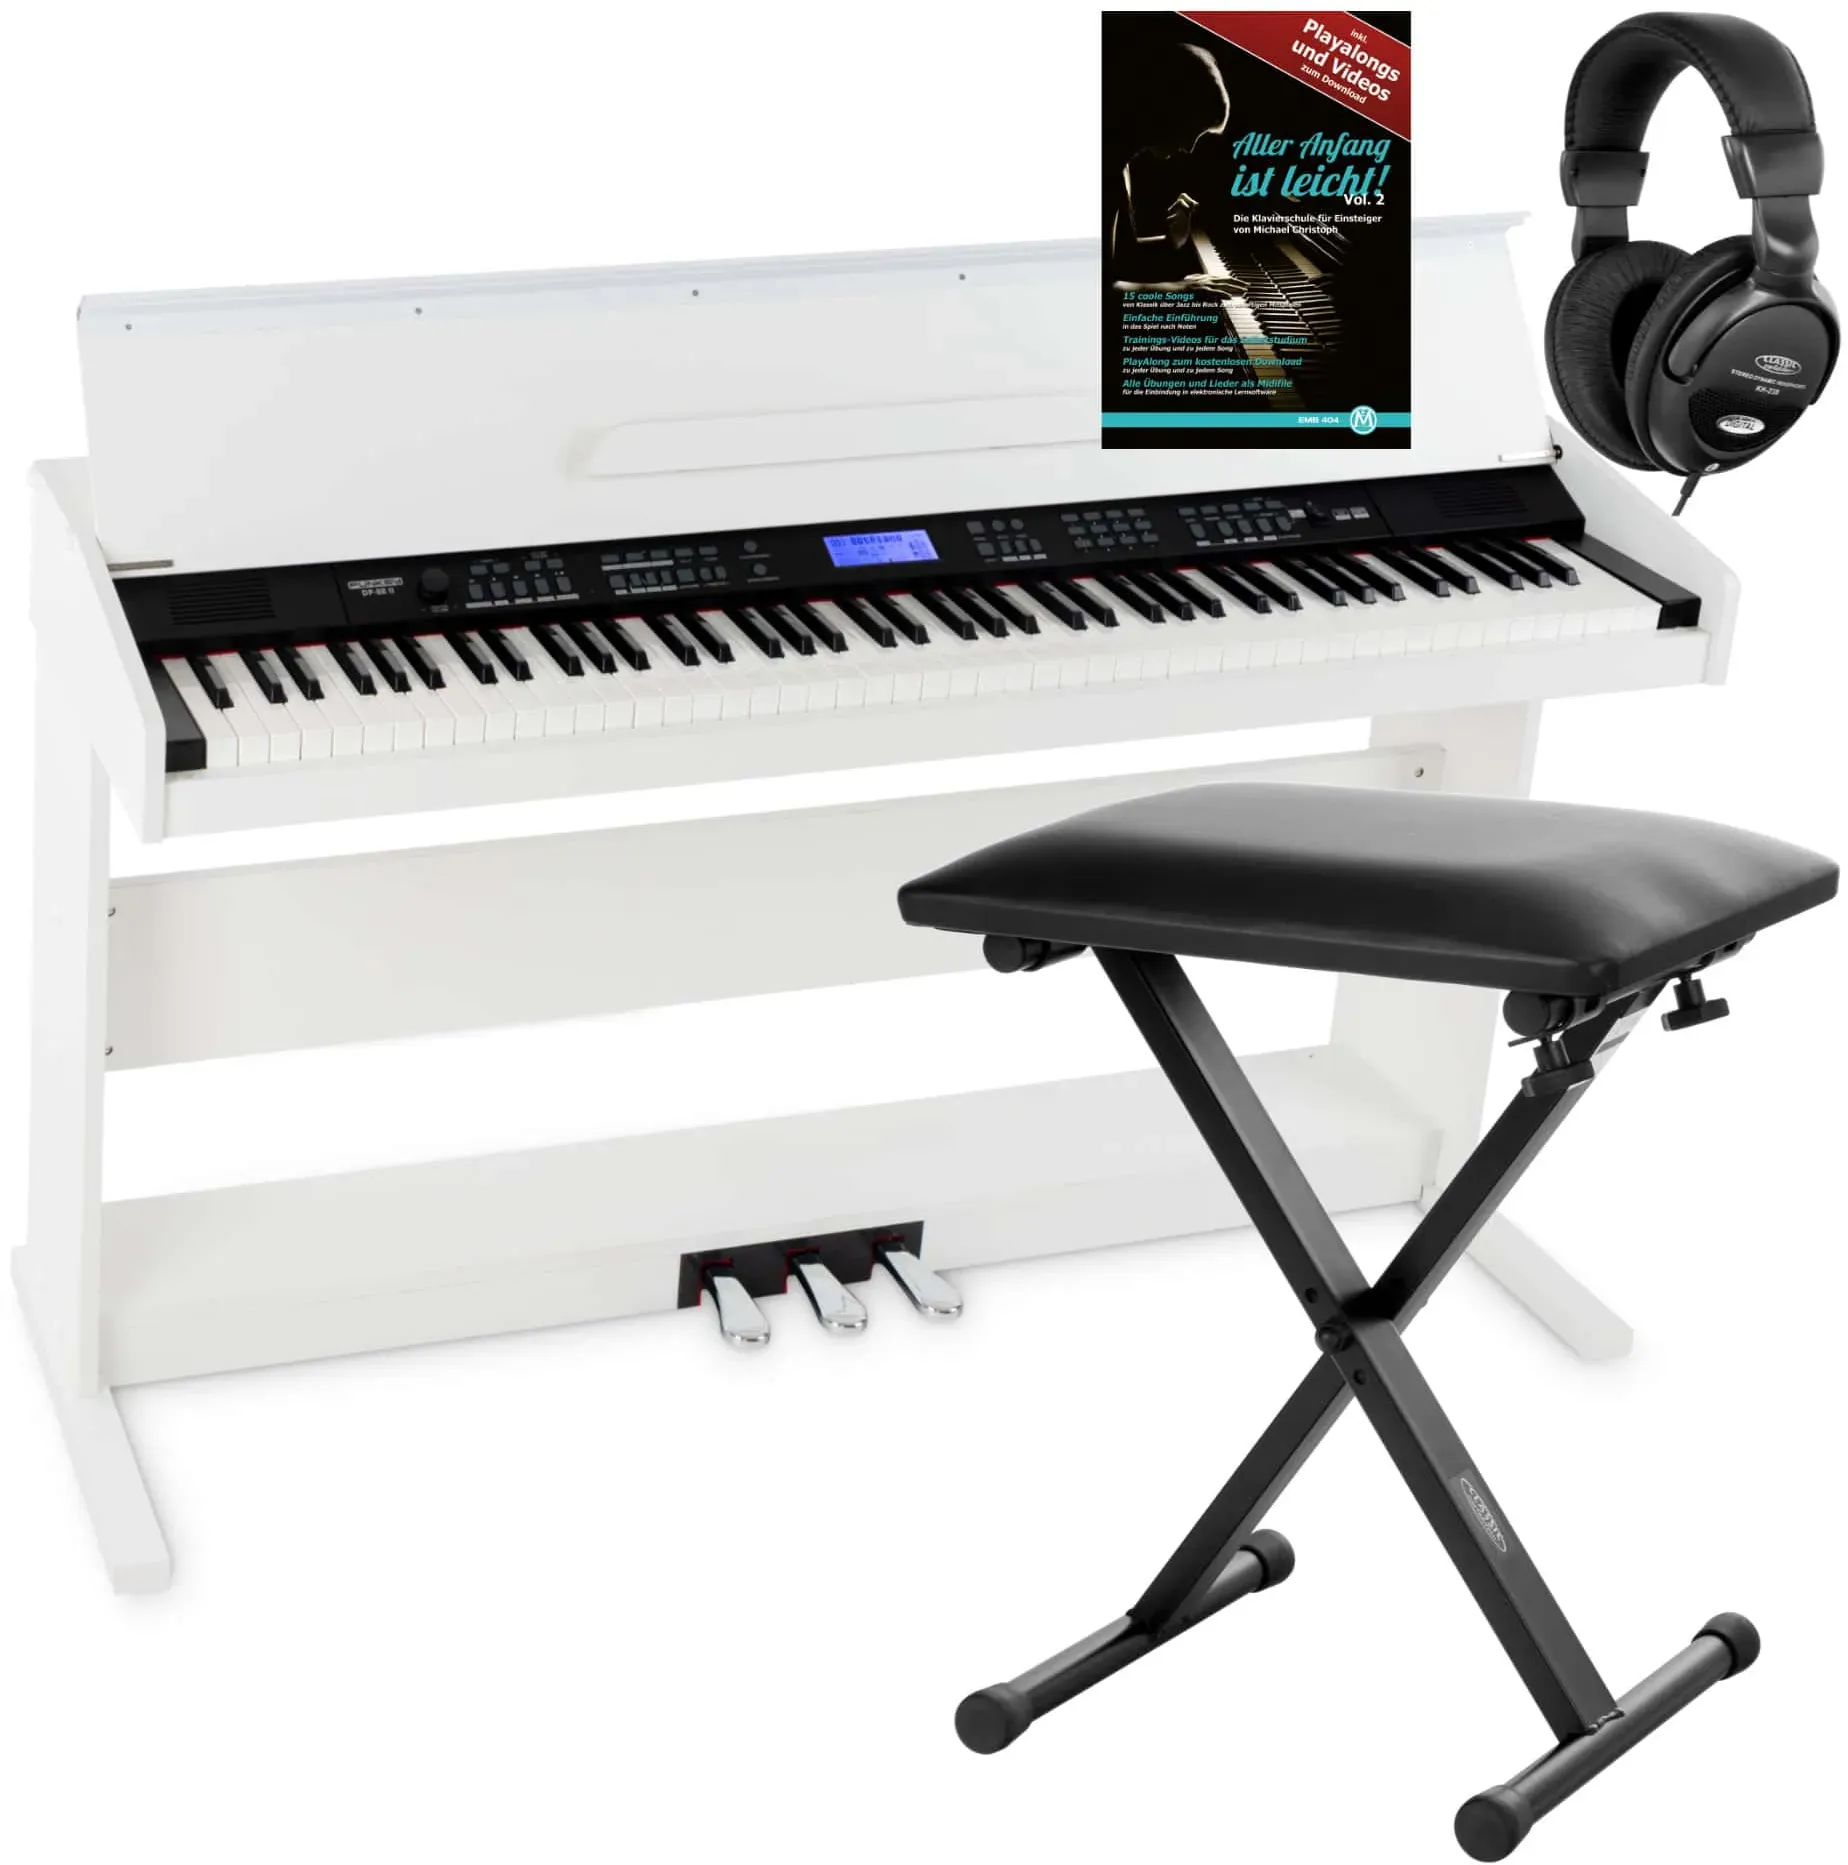 FunKey DP-88 II Digitalpiano weiß Set mit Economy Keyboardbank, Kopfhörer und Klavierschule